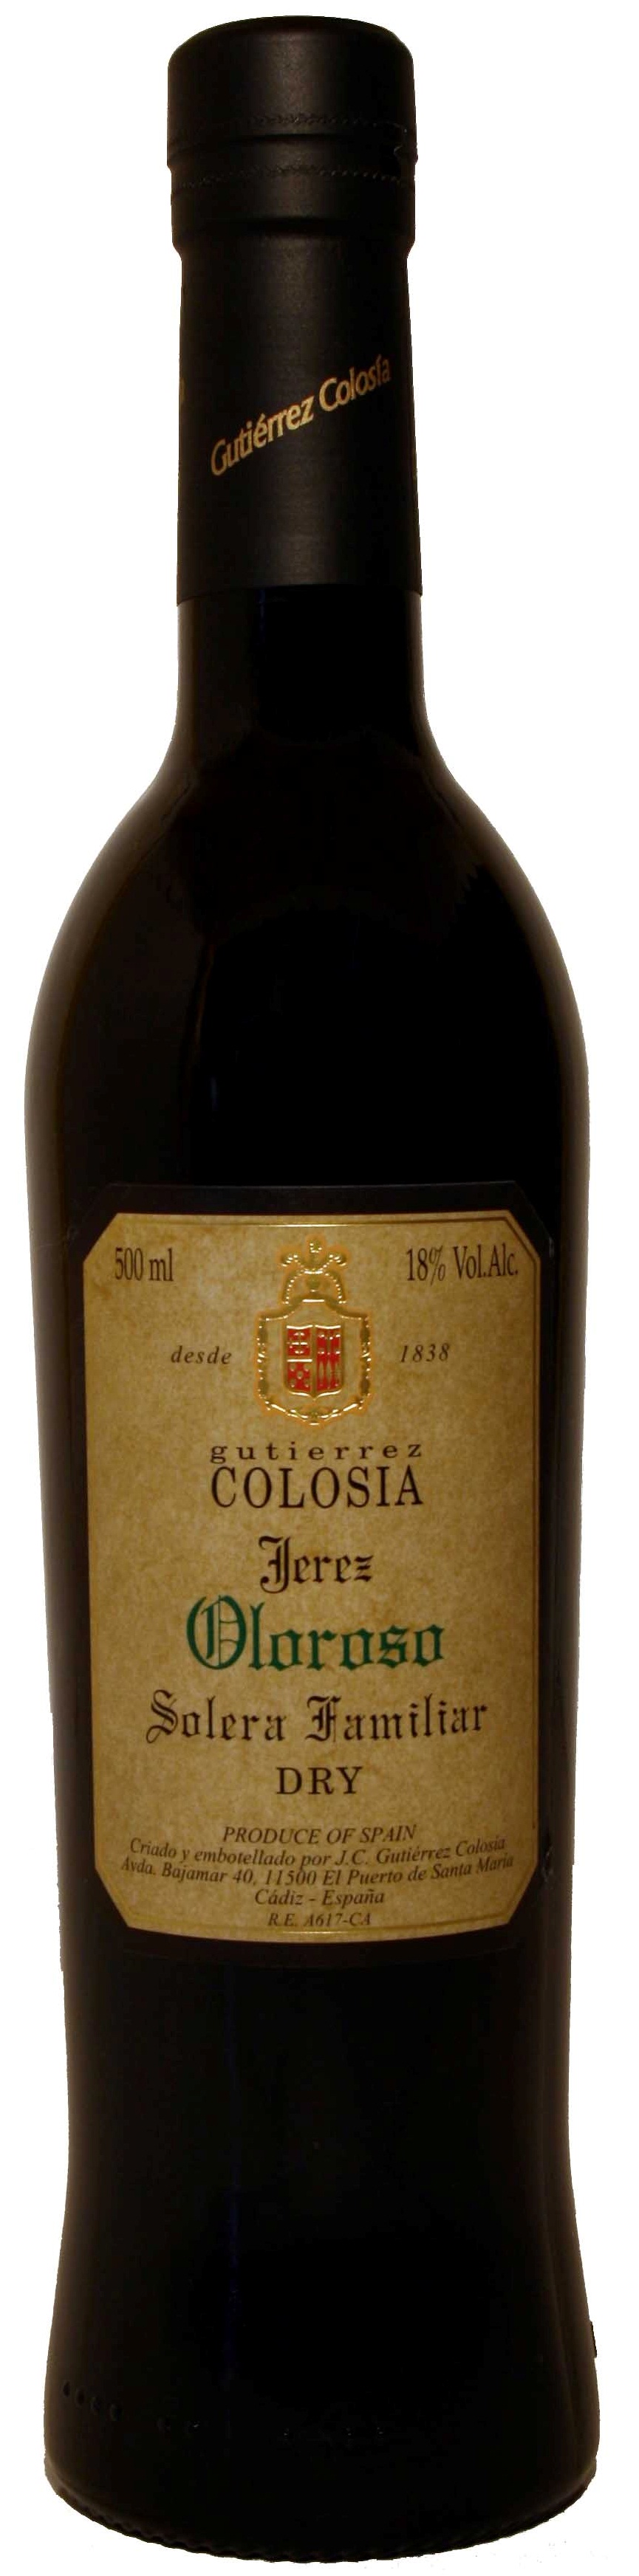 Imagen de la botella de Vino Colosía Solera Familiar Oloroso